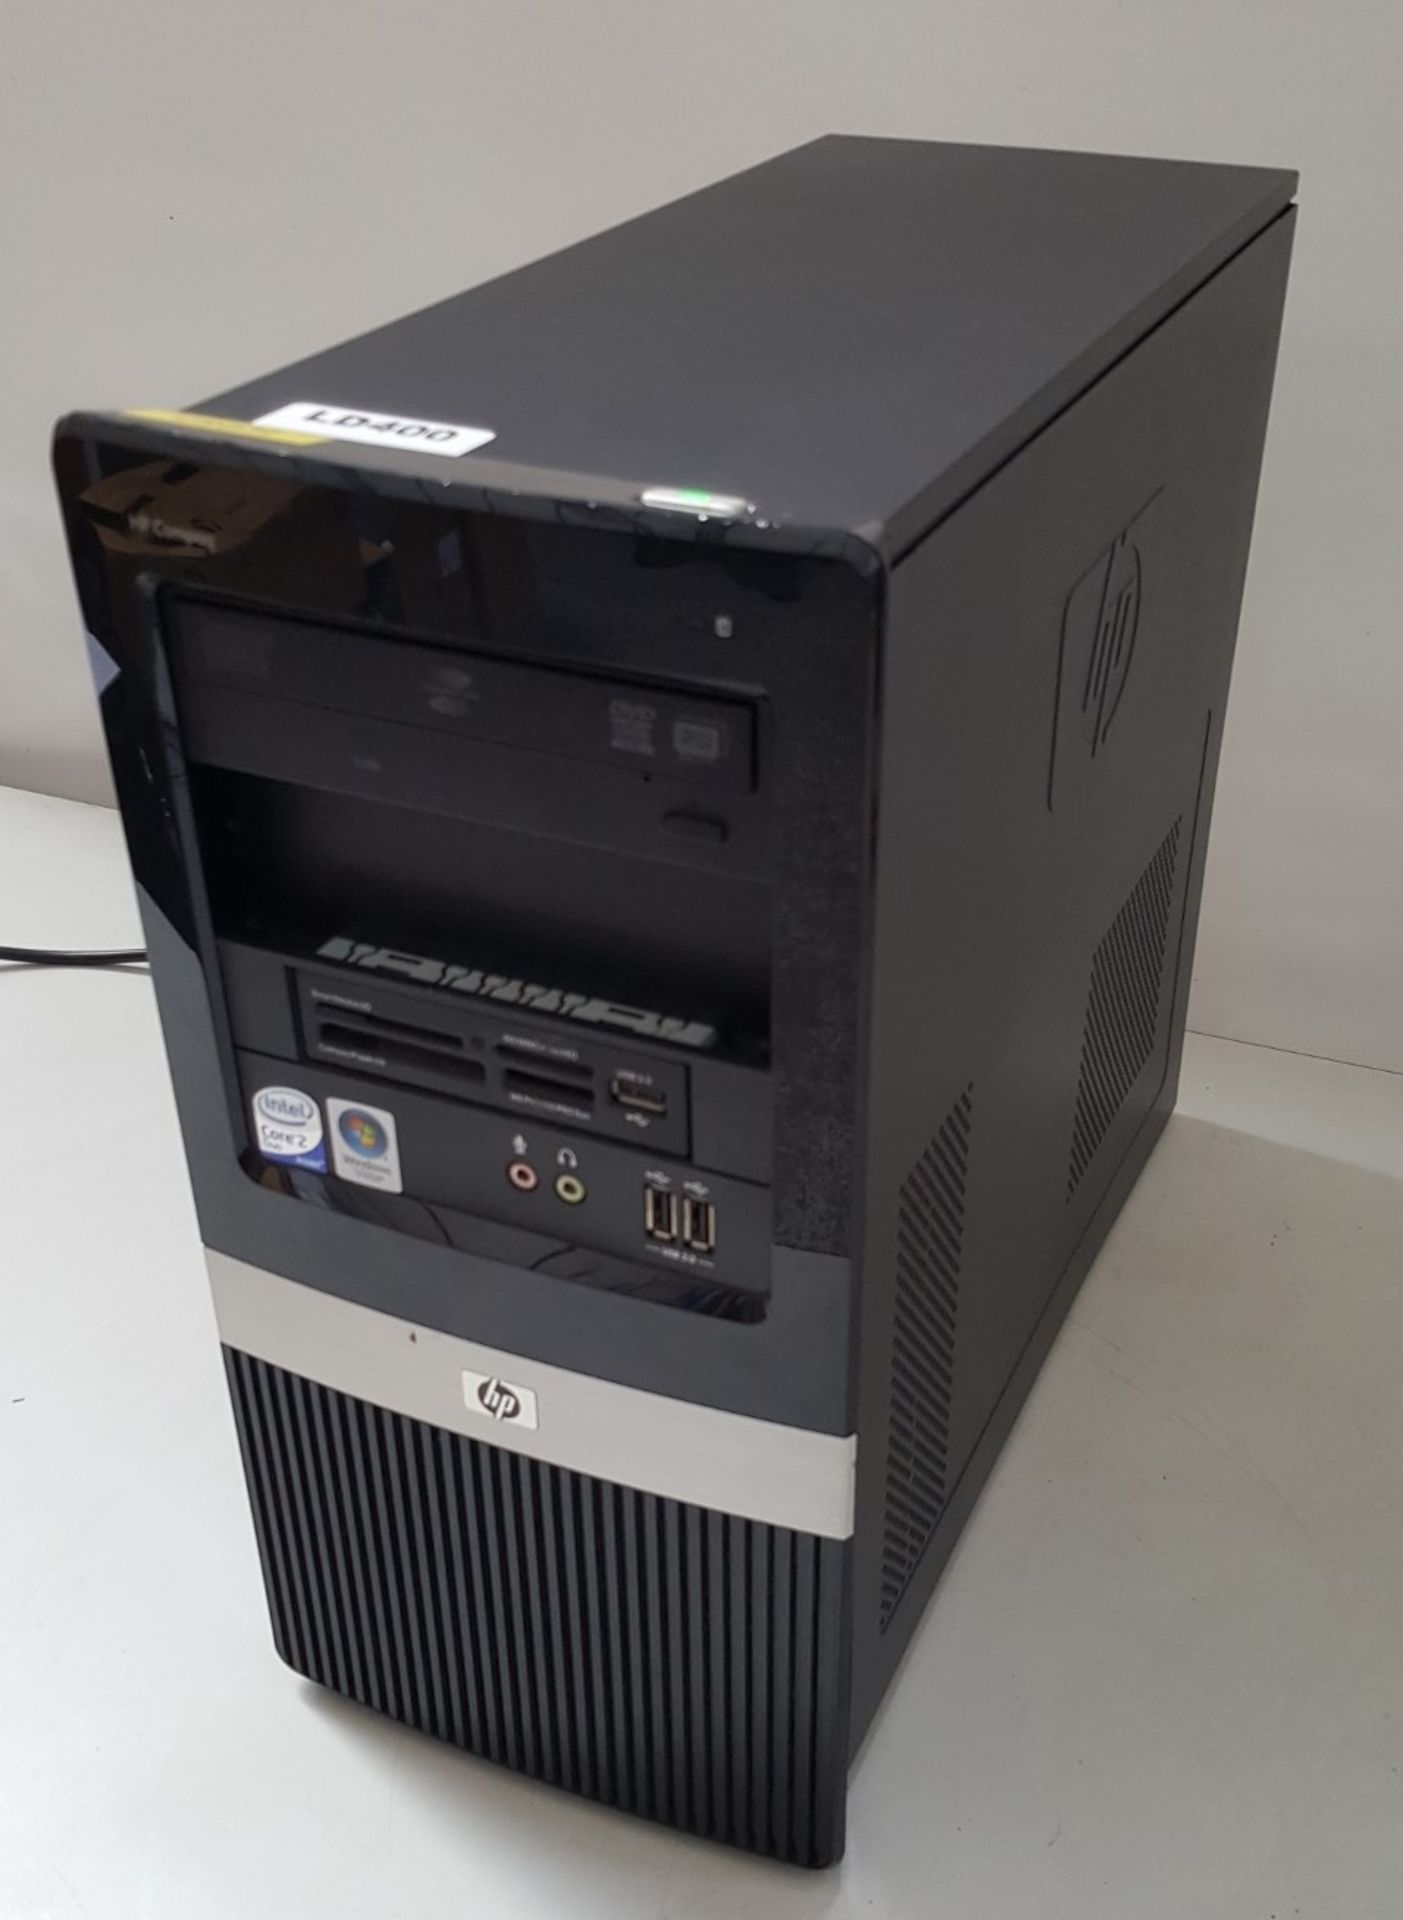 1 x HP Compaq DX2400 Desktop PC Intel Core 2 Duo 3 GHz 2GB RAM - Ref LD400 - Image 5 of 6